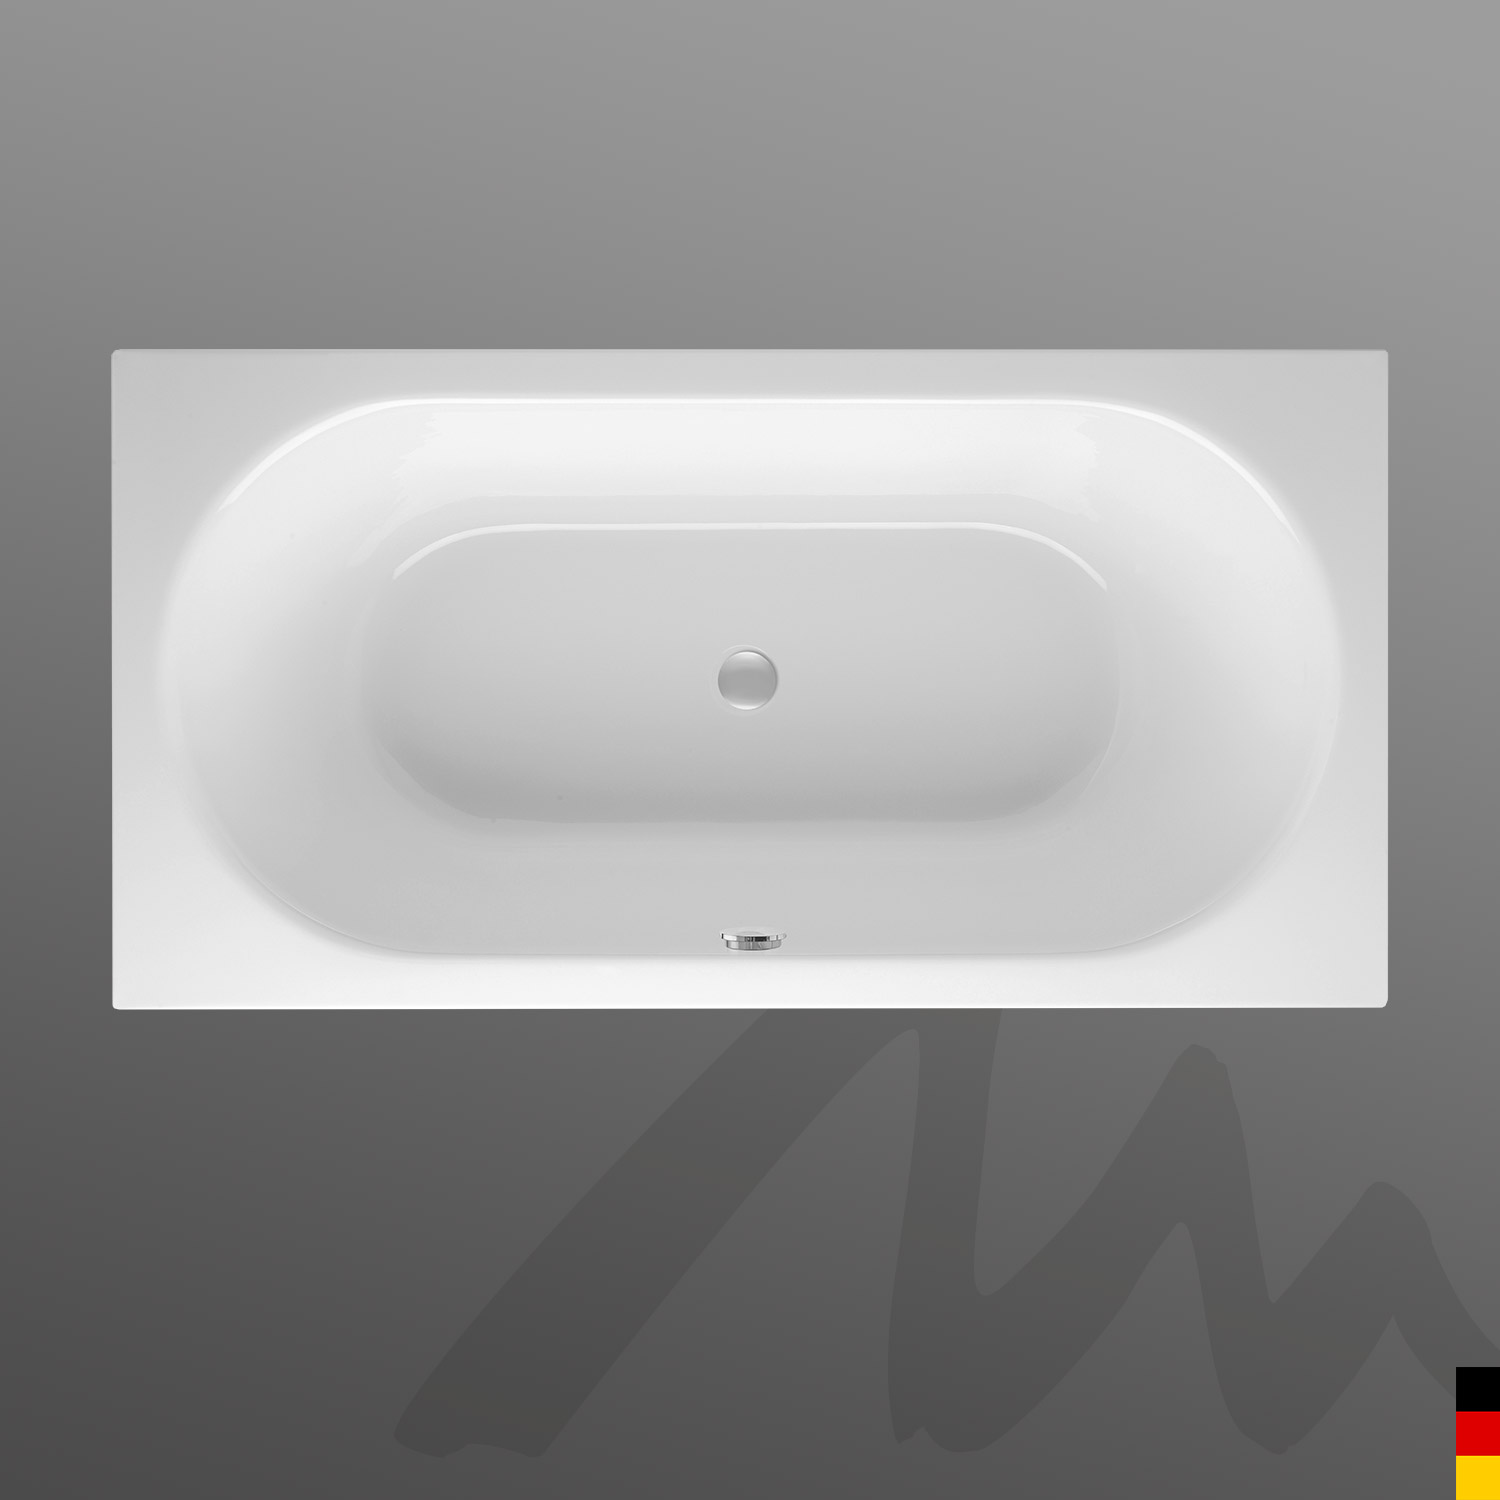 Mauersberger Badewanne Rechteck Ausana 170/75 duo  170x75x44cm  Farbe:rein-weiß